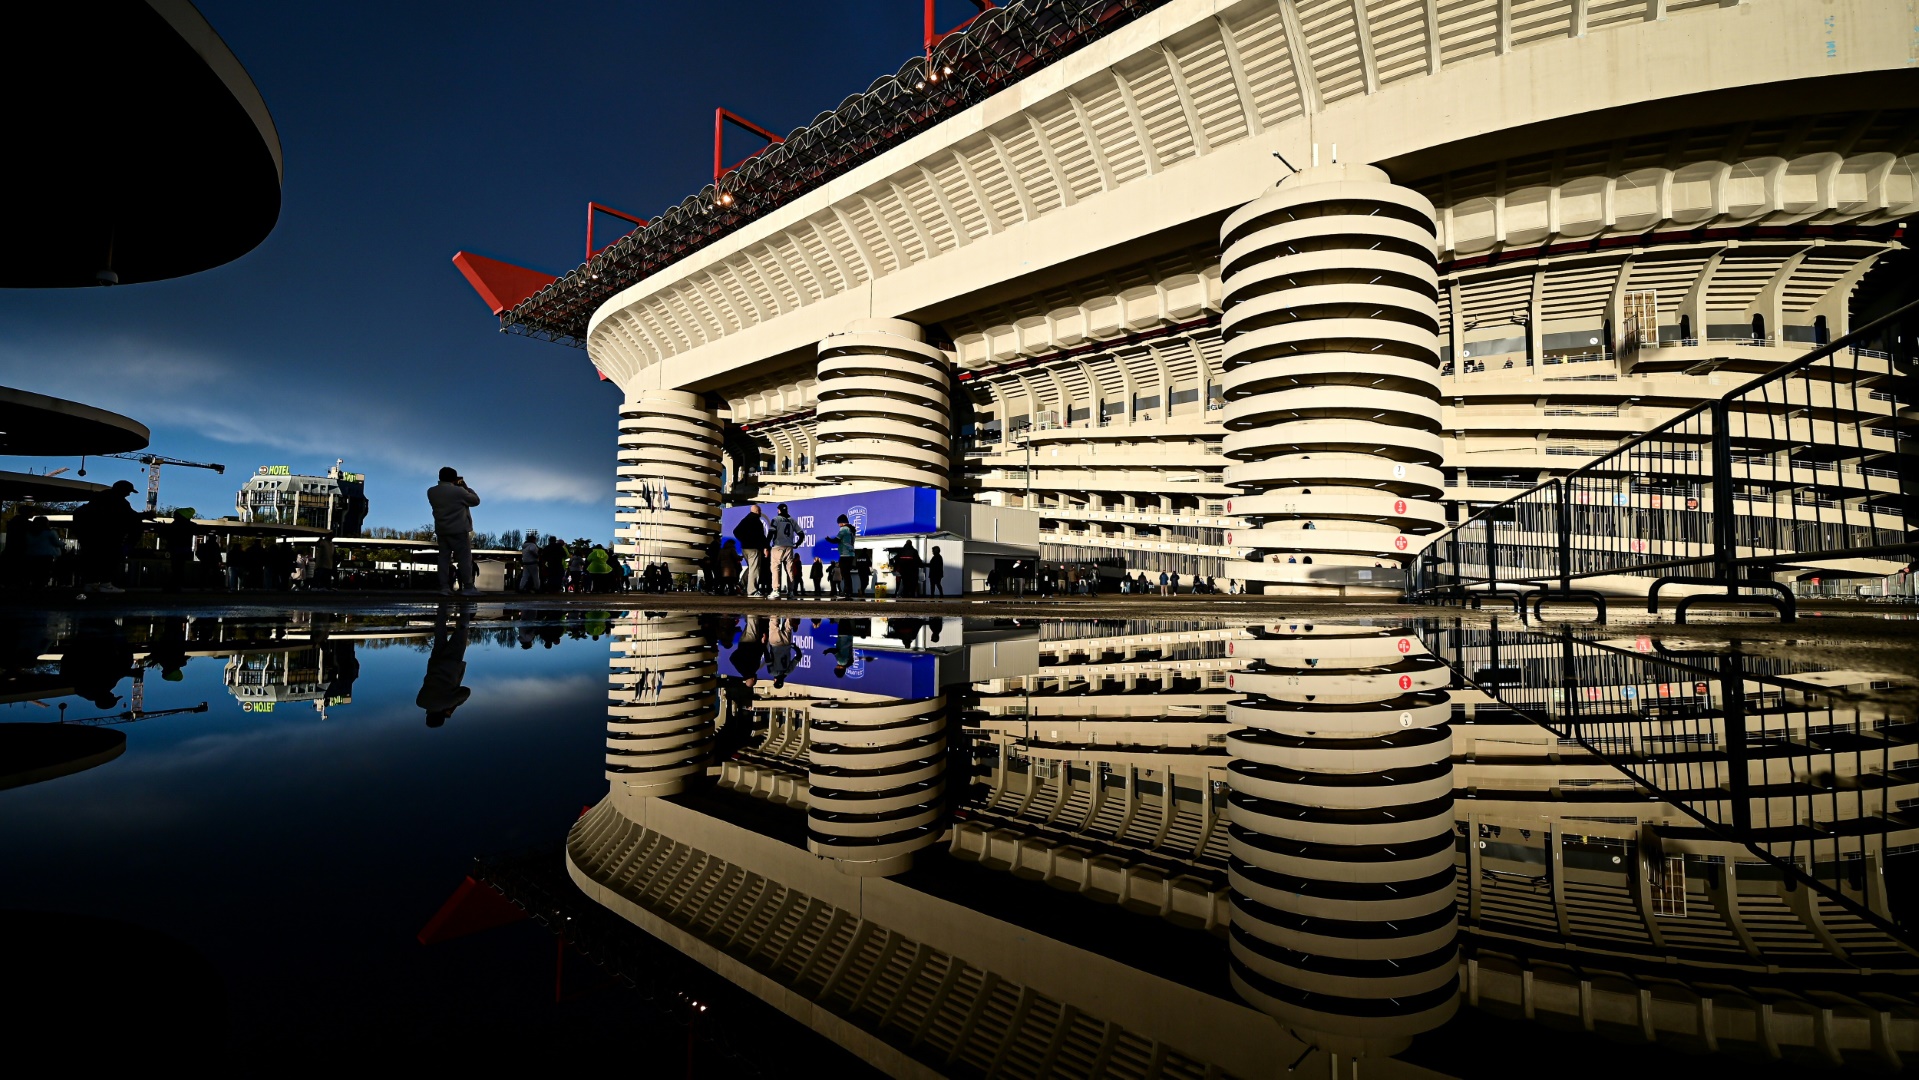 Inter Mailand lockt regelmäßig viele Fans ins San Siro